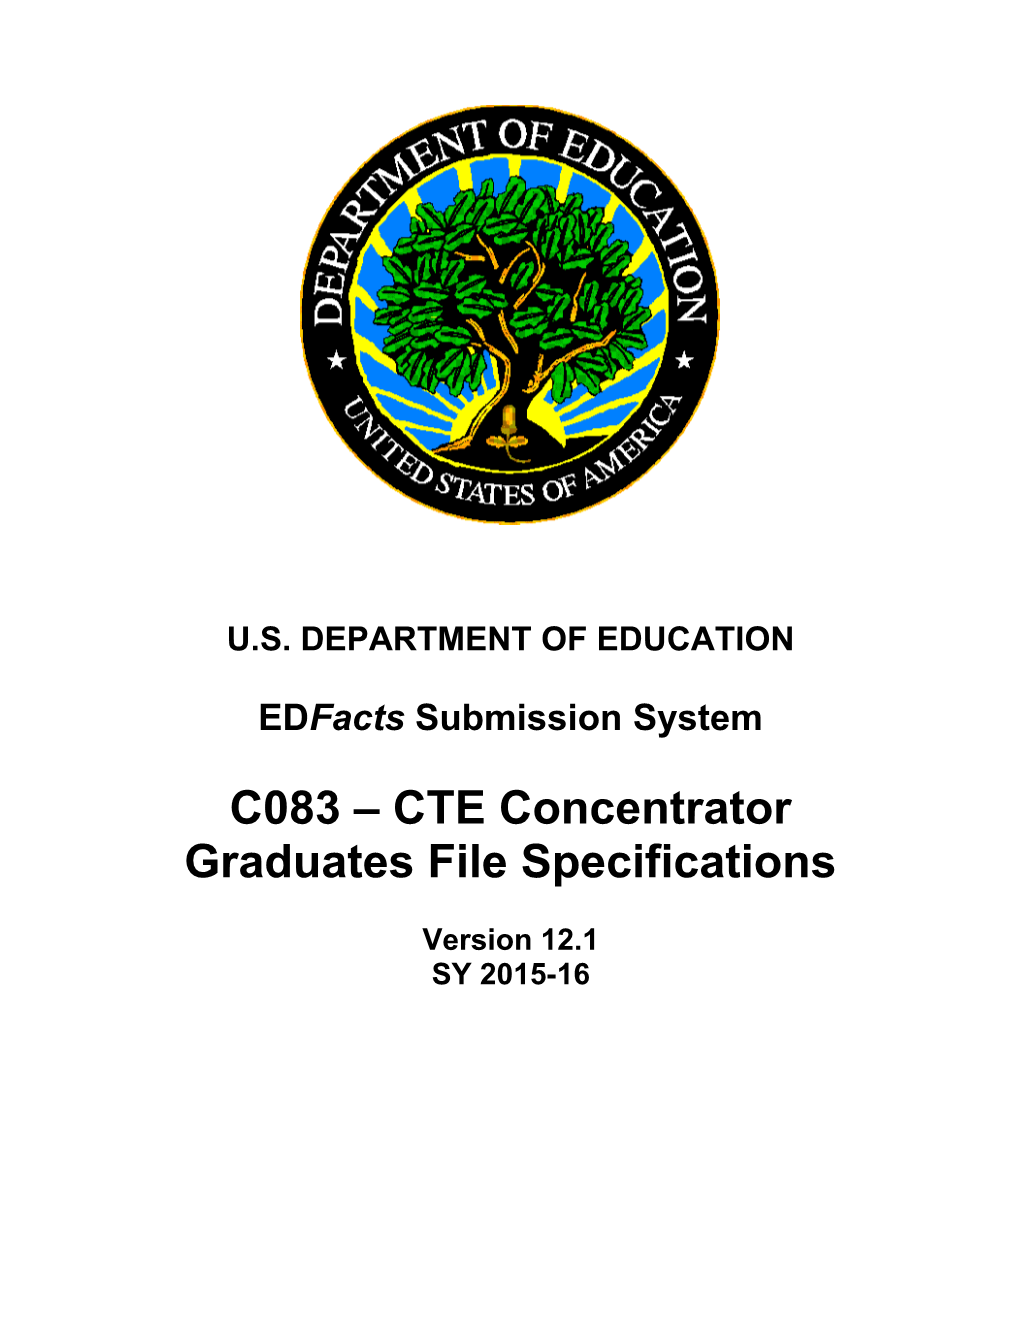 CTE Concentrator Graduates File Specifications (Msword)